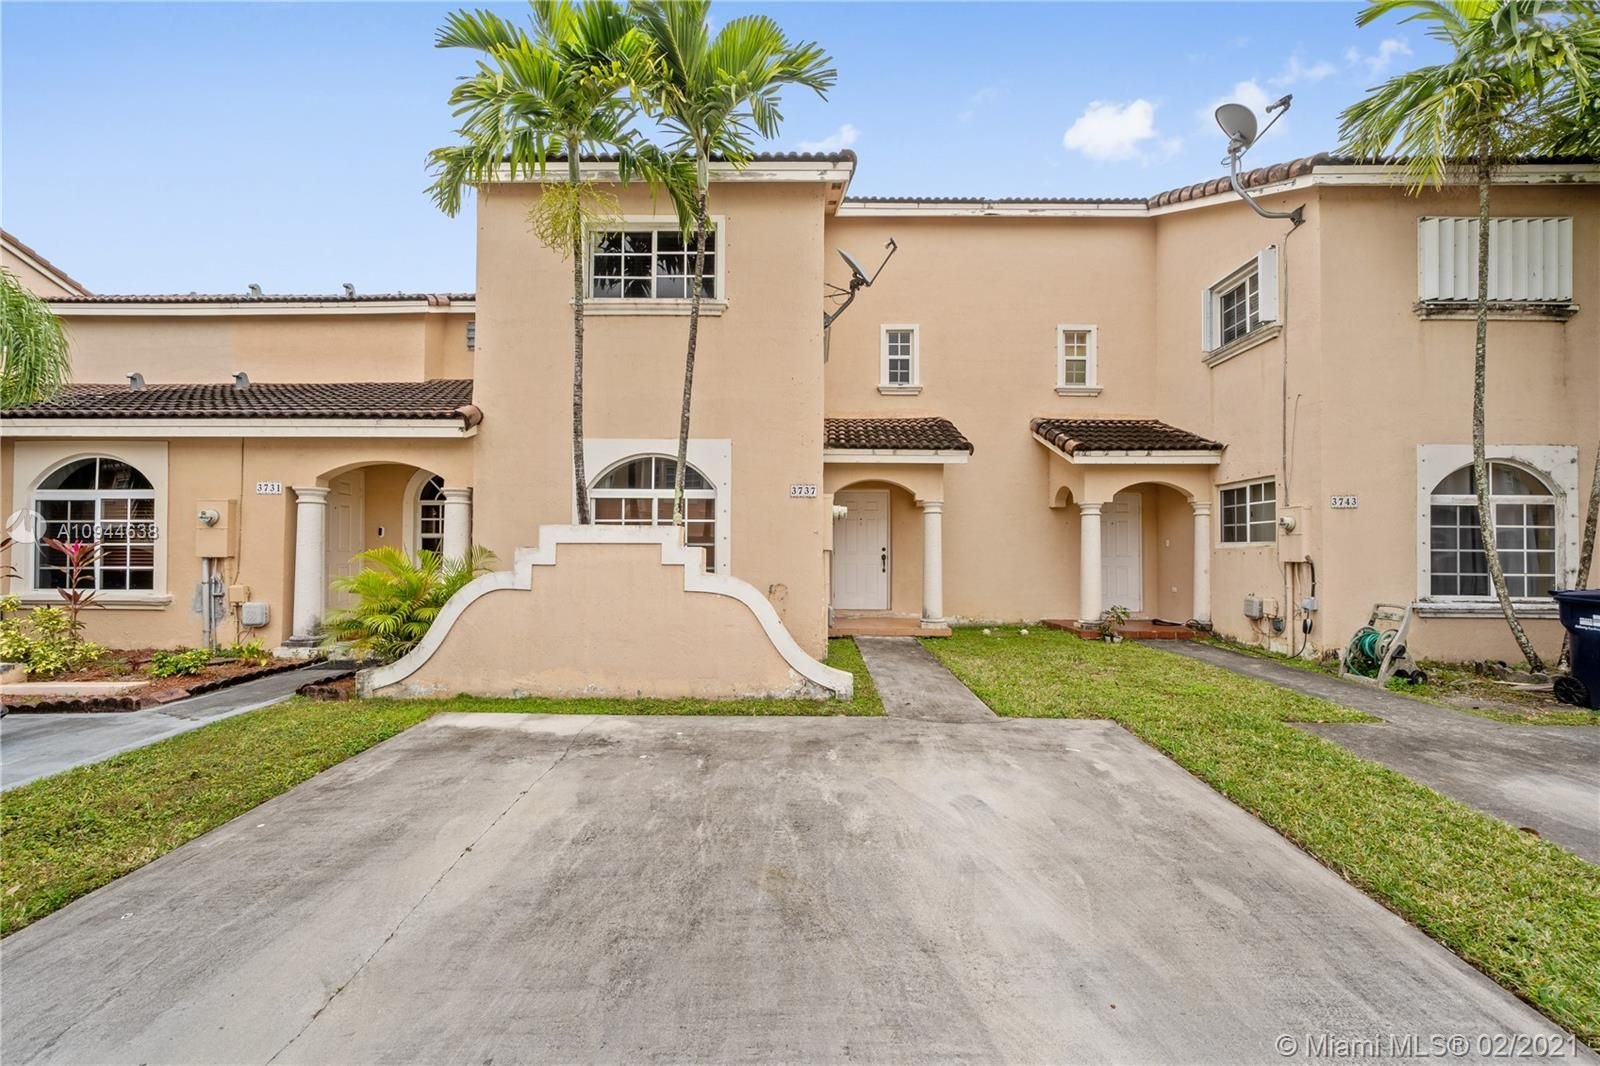 Real estate property located at 3737 153rd Ct #1, Miami-Dade County, Miami, FL